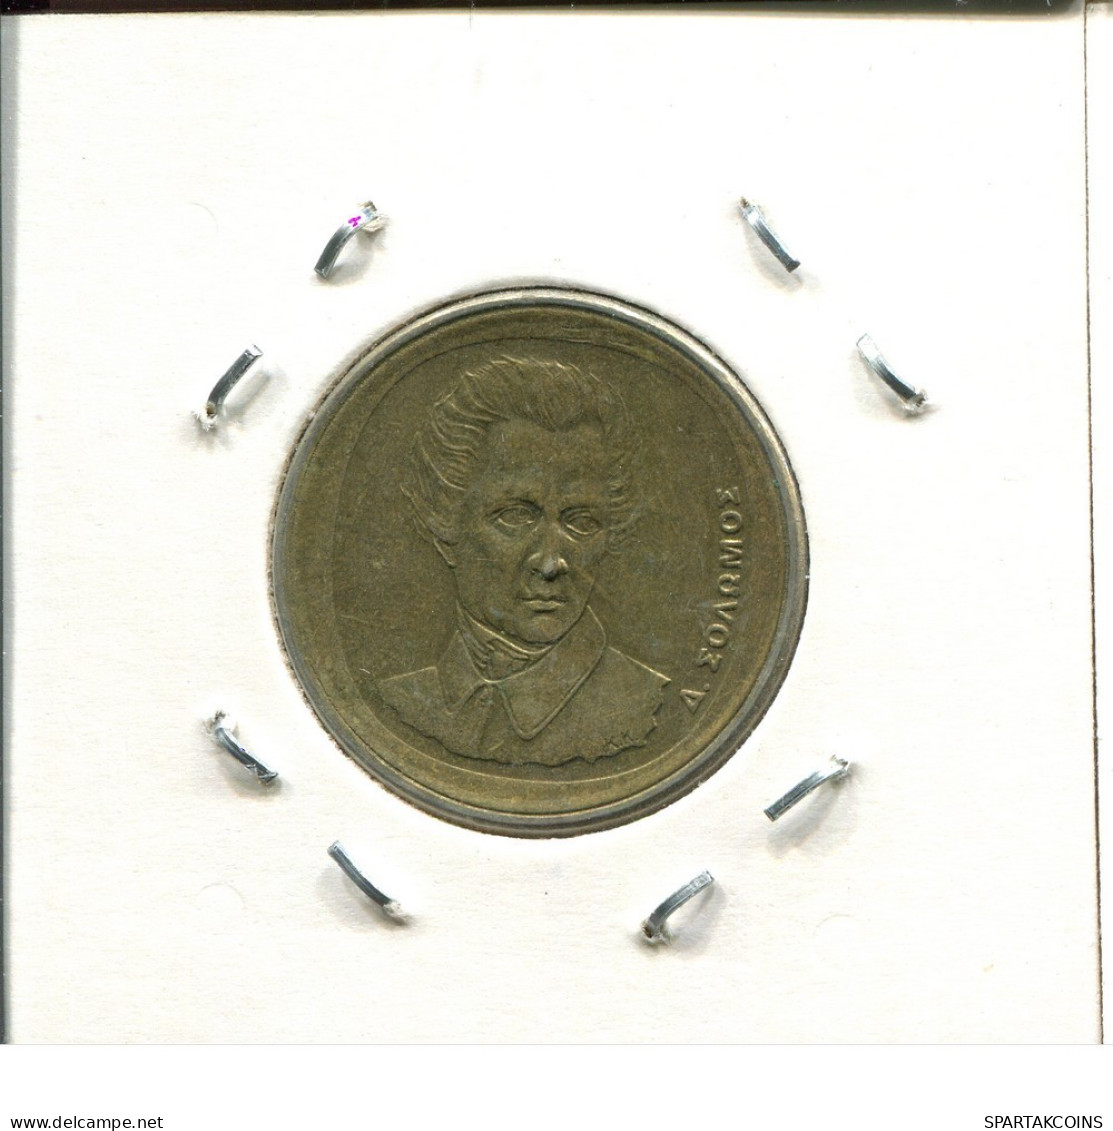 20 DRACHMES 1990 GREECE Coin #AS443.U.A - Griechenland